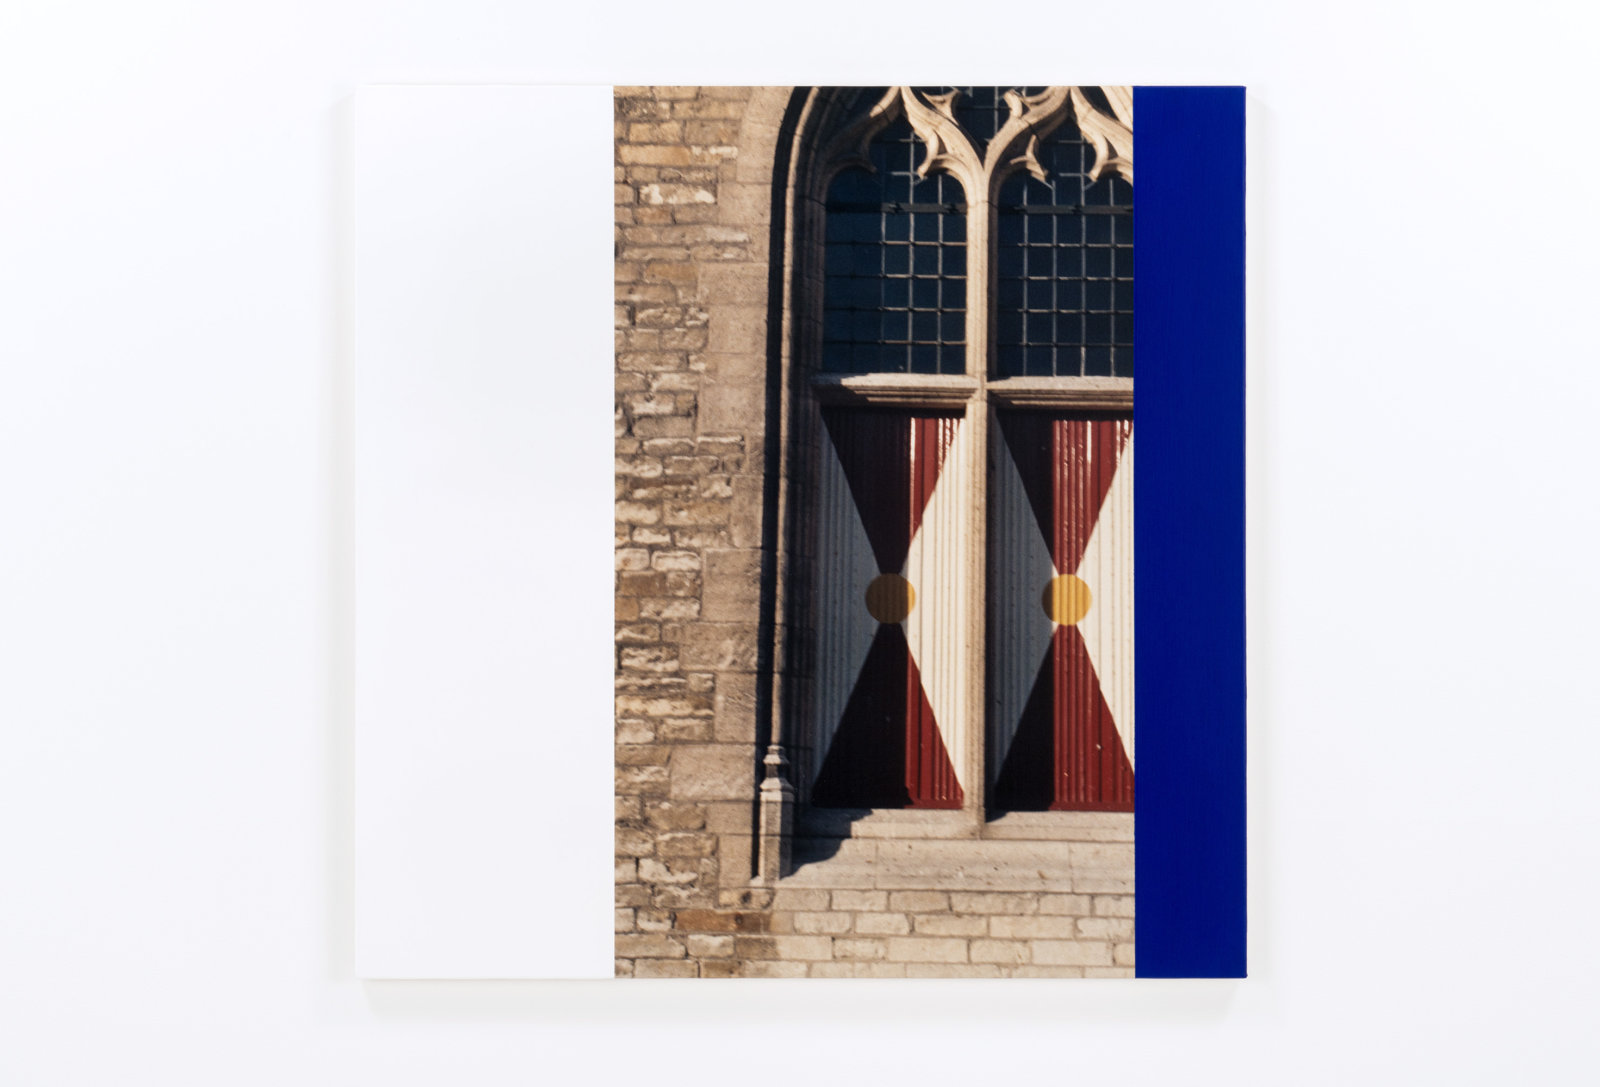 Ian Wallace, Hommage a Mondrian IX (Windows), 1990, photolaminate and acrylic on canvas, 48 x 48 in. (122 x 122 cm)